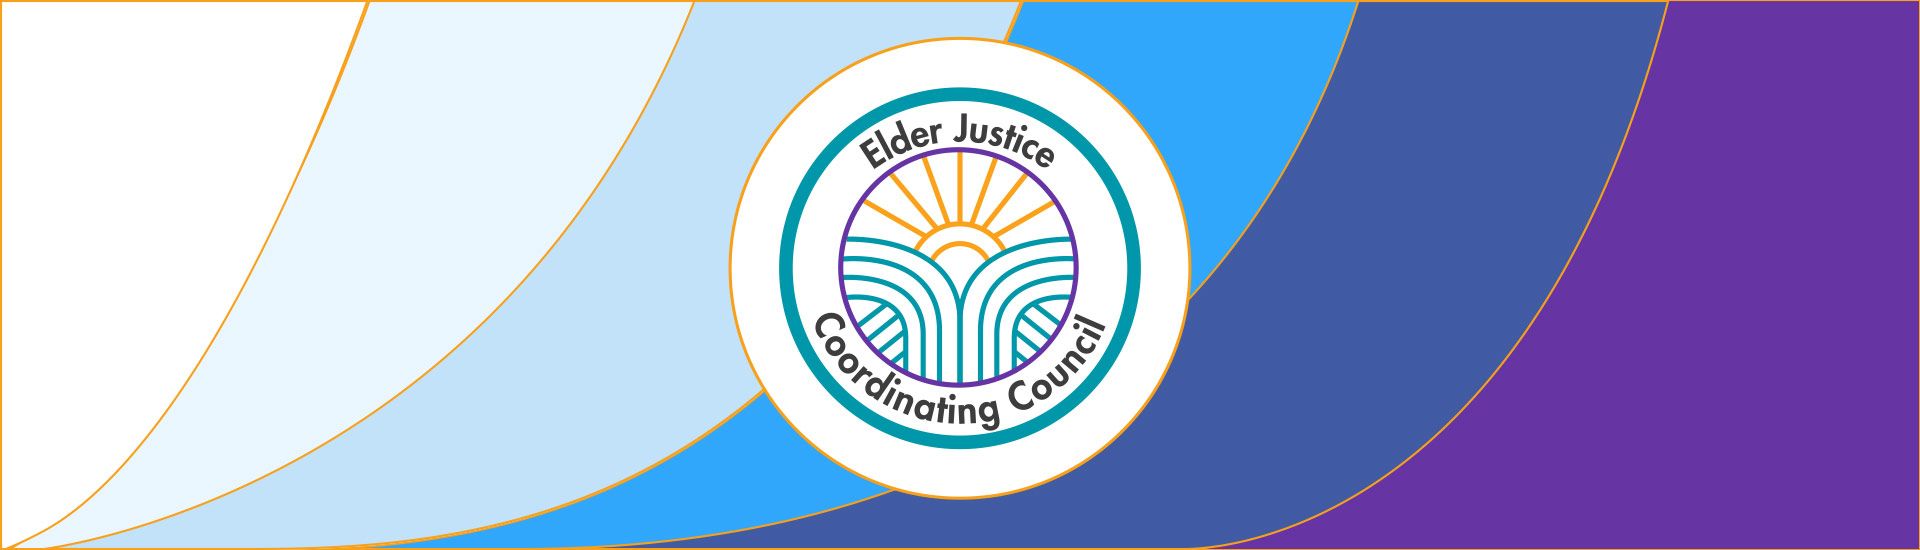 Elder Justice Coordinating Council banner